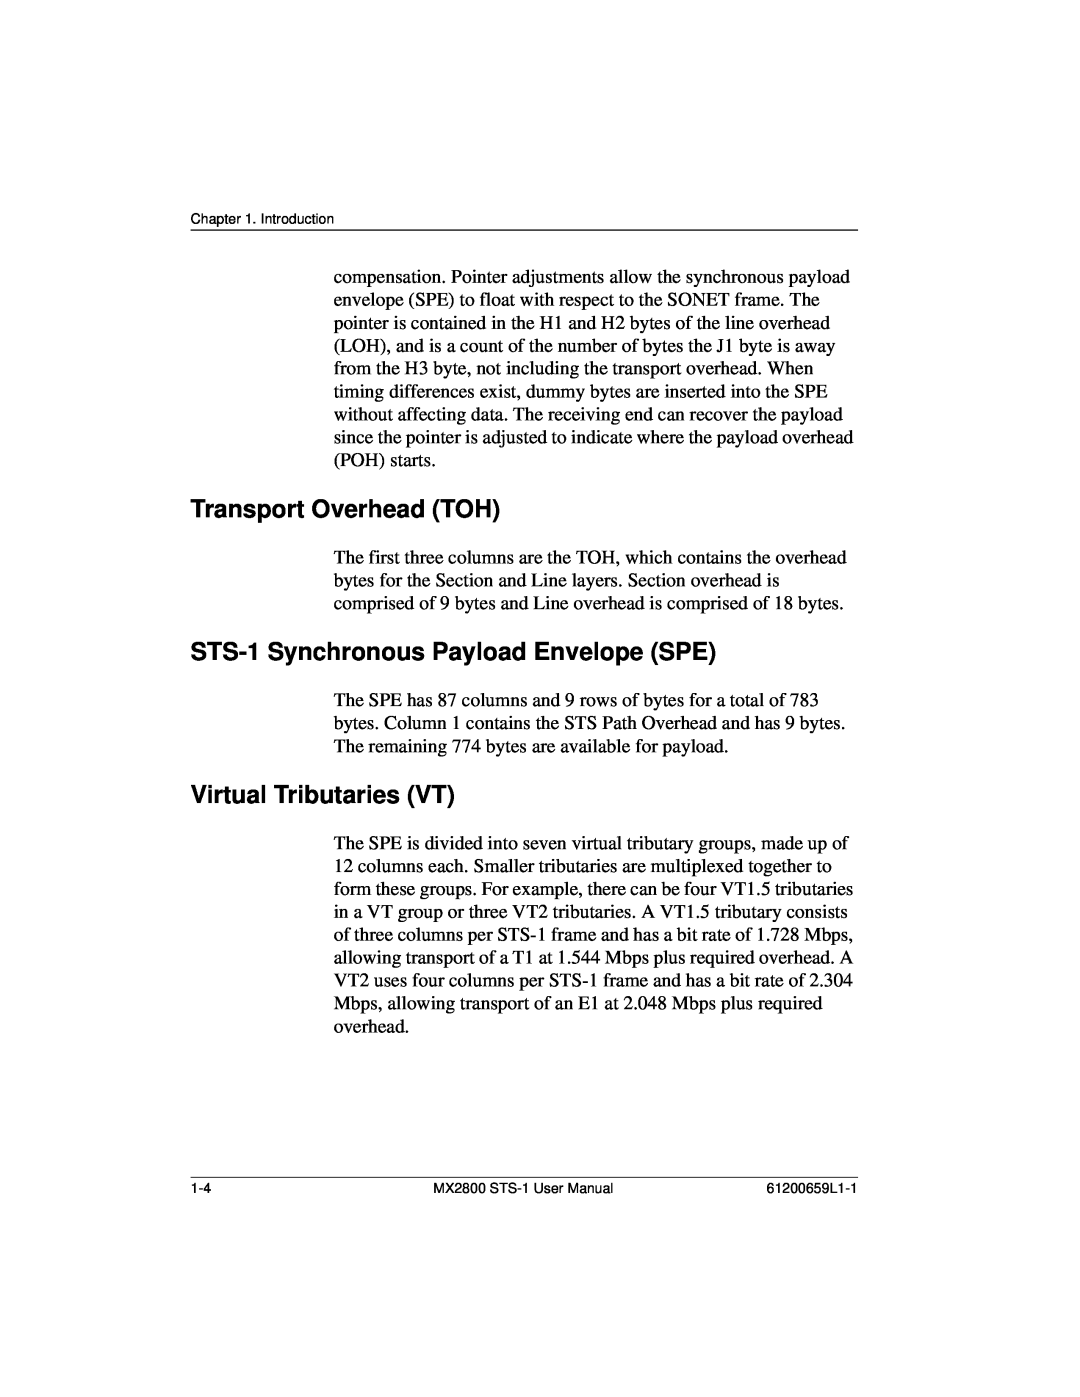 ADTRAN 4200659L5, 4200659L1 Transport Overhead TOH, STS-1 Synchronous Payload Envelope SPE, Virtual Tributaries VT 